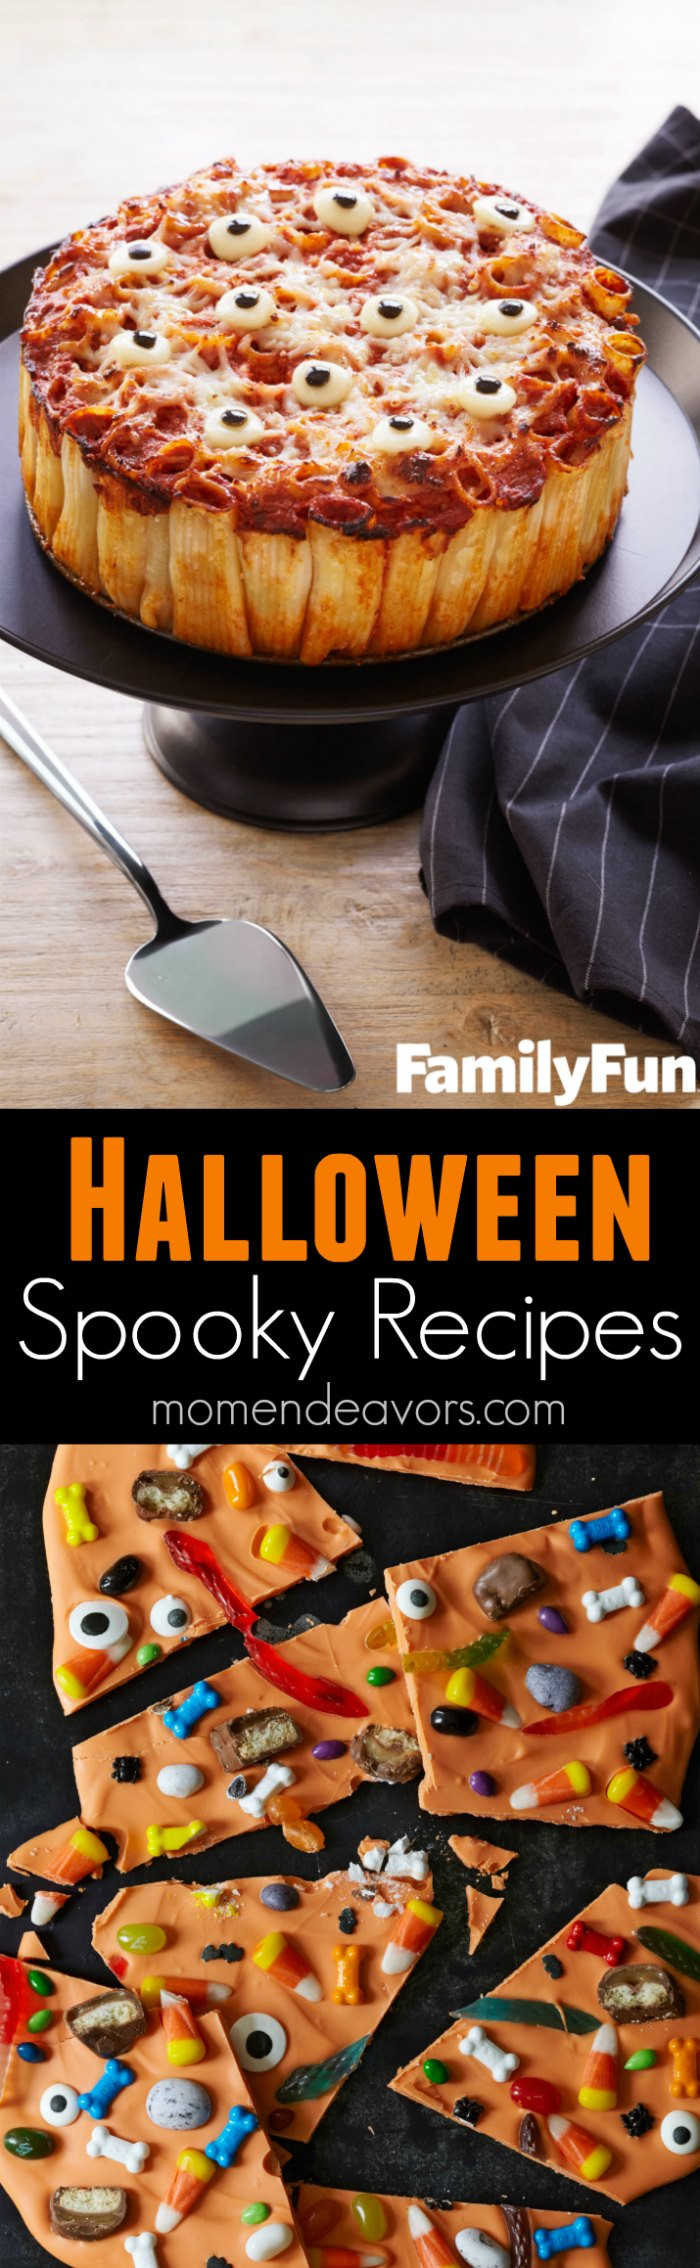 Halloween Recipe Ideas Party
 Spooky Halloween Party Recipes